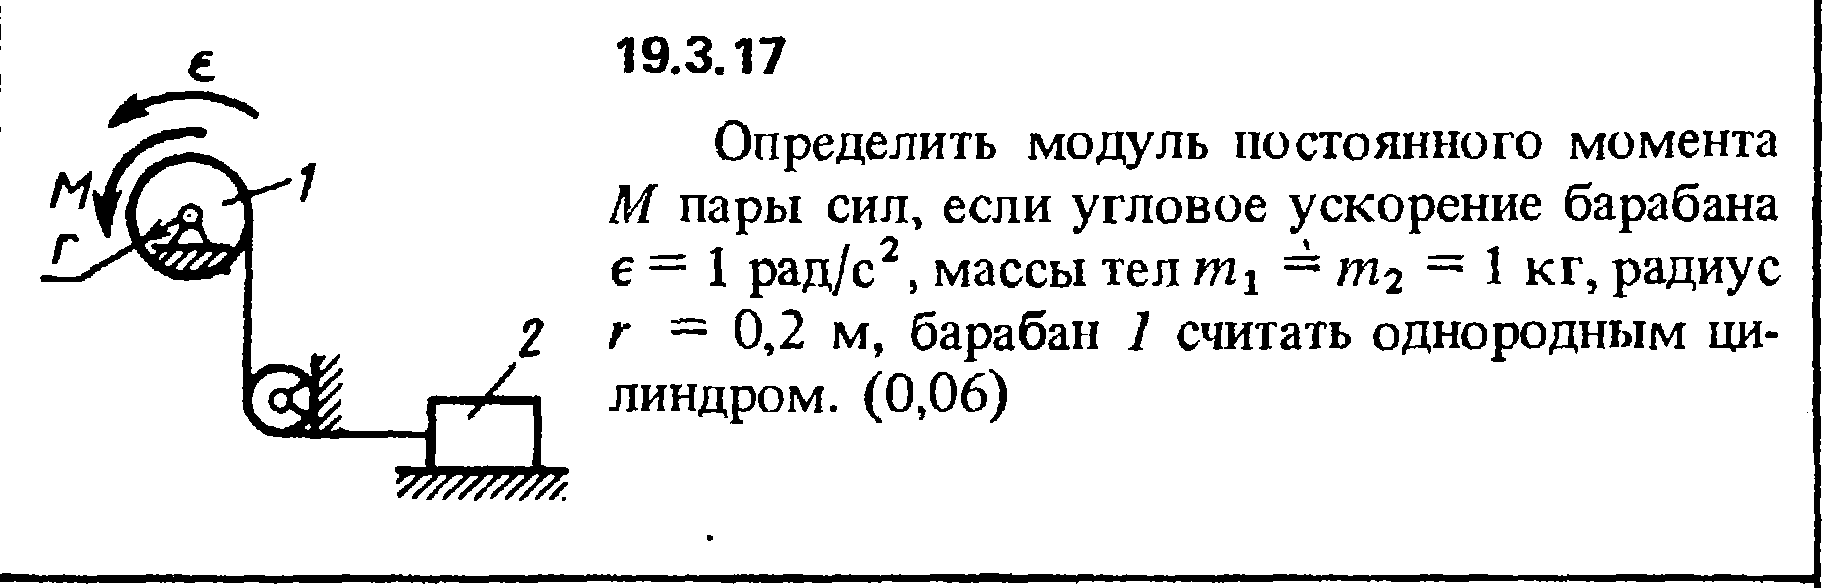 Решение 19.3.17 из сборника (решебника) Кепе О.Е. 1989